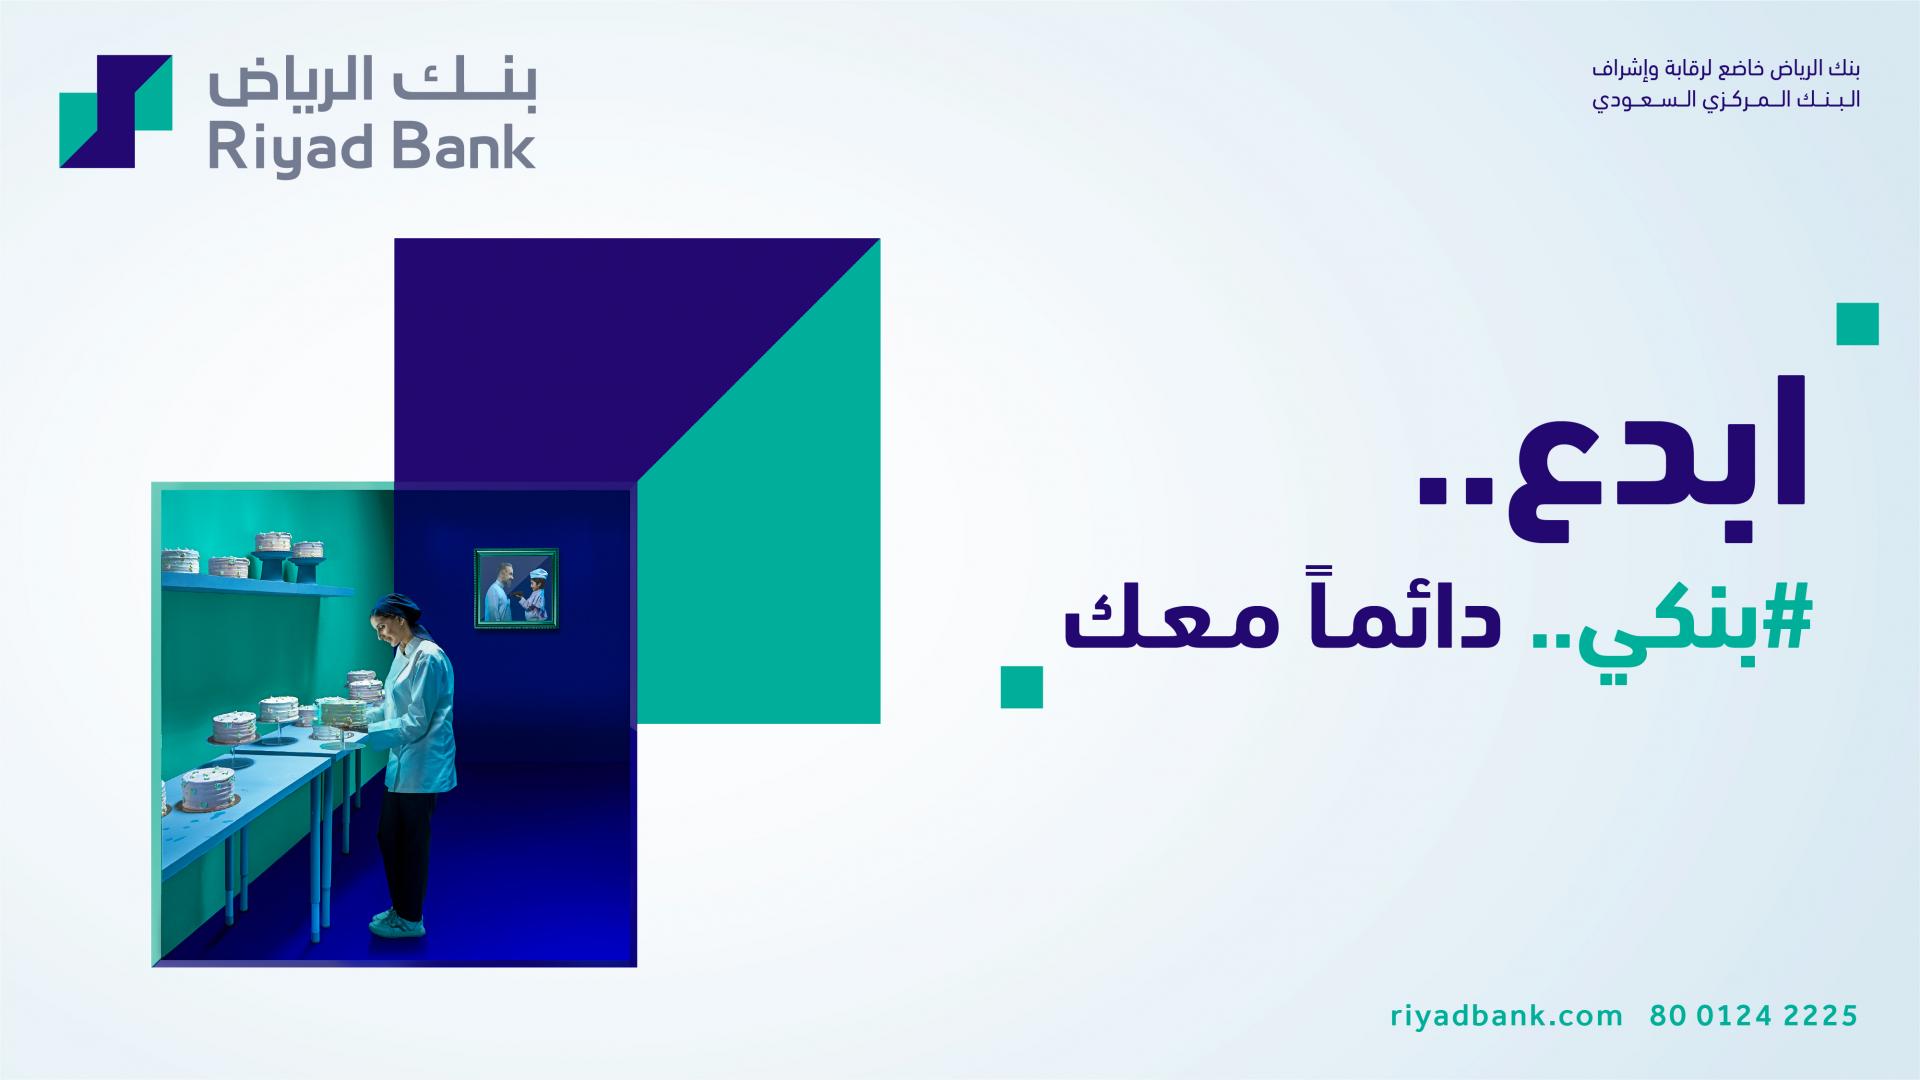 Vega Digital Awards Winner - Riyad Bank Rebranding Campaign, Vibelab Agency 